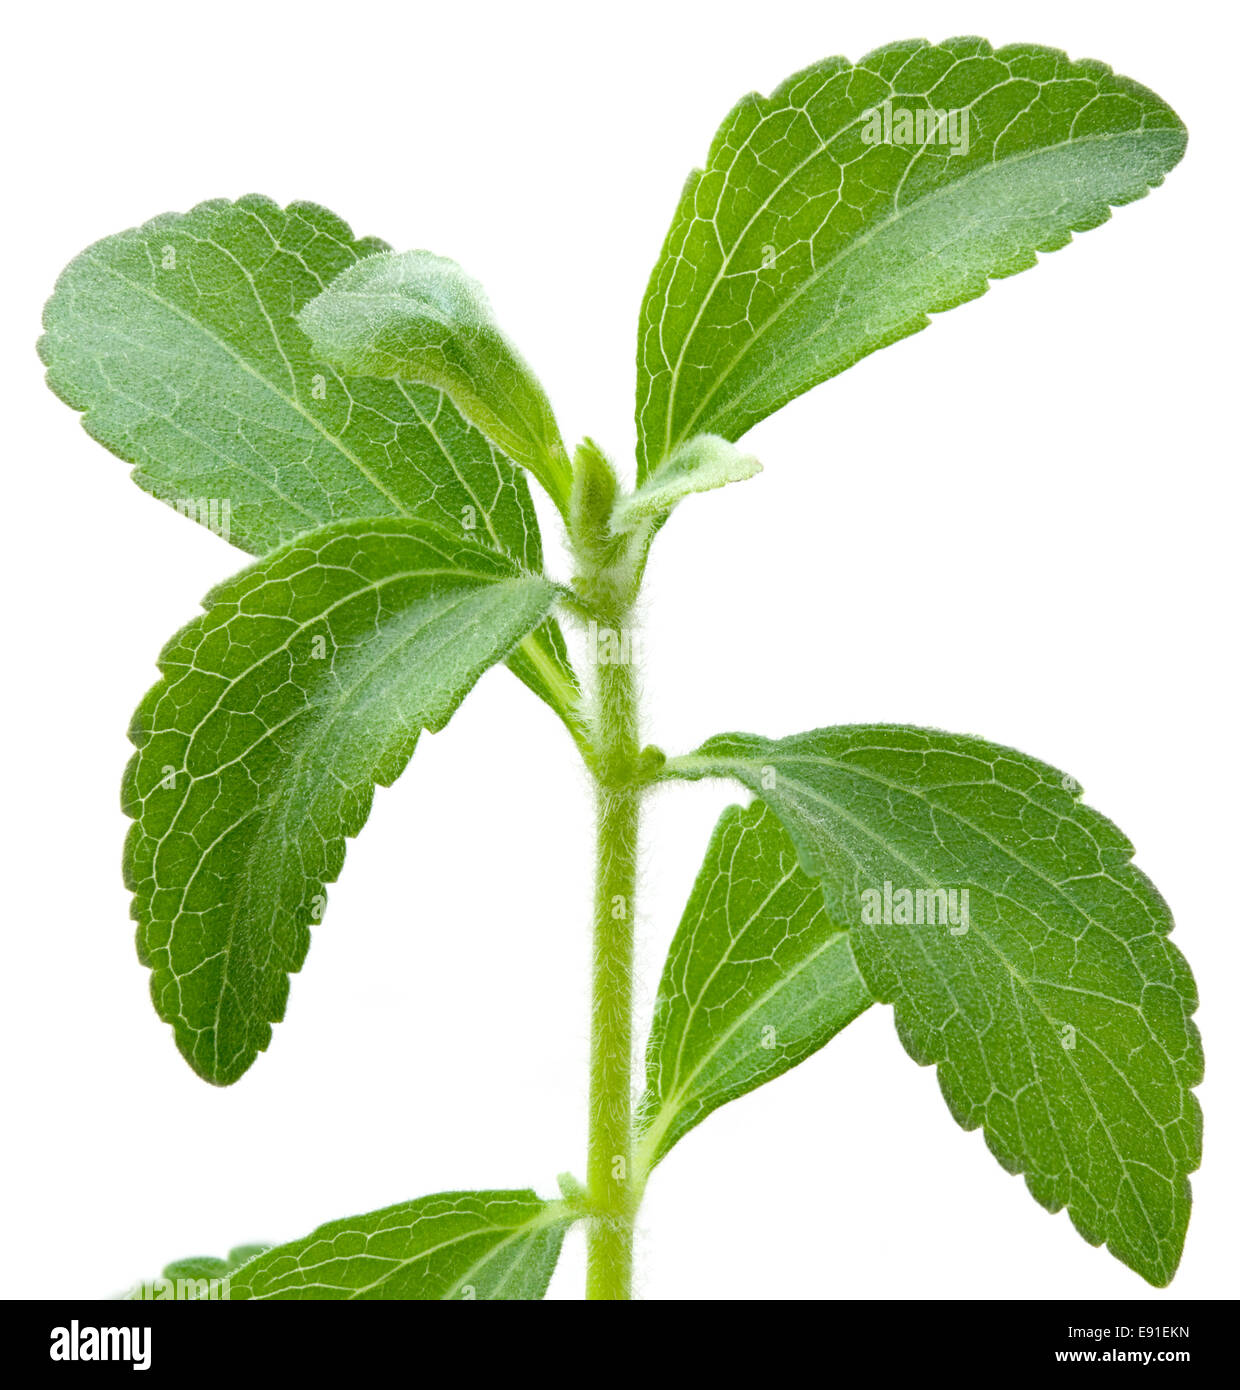 Pianta di Stevia Foto stock - Alamy